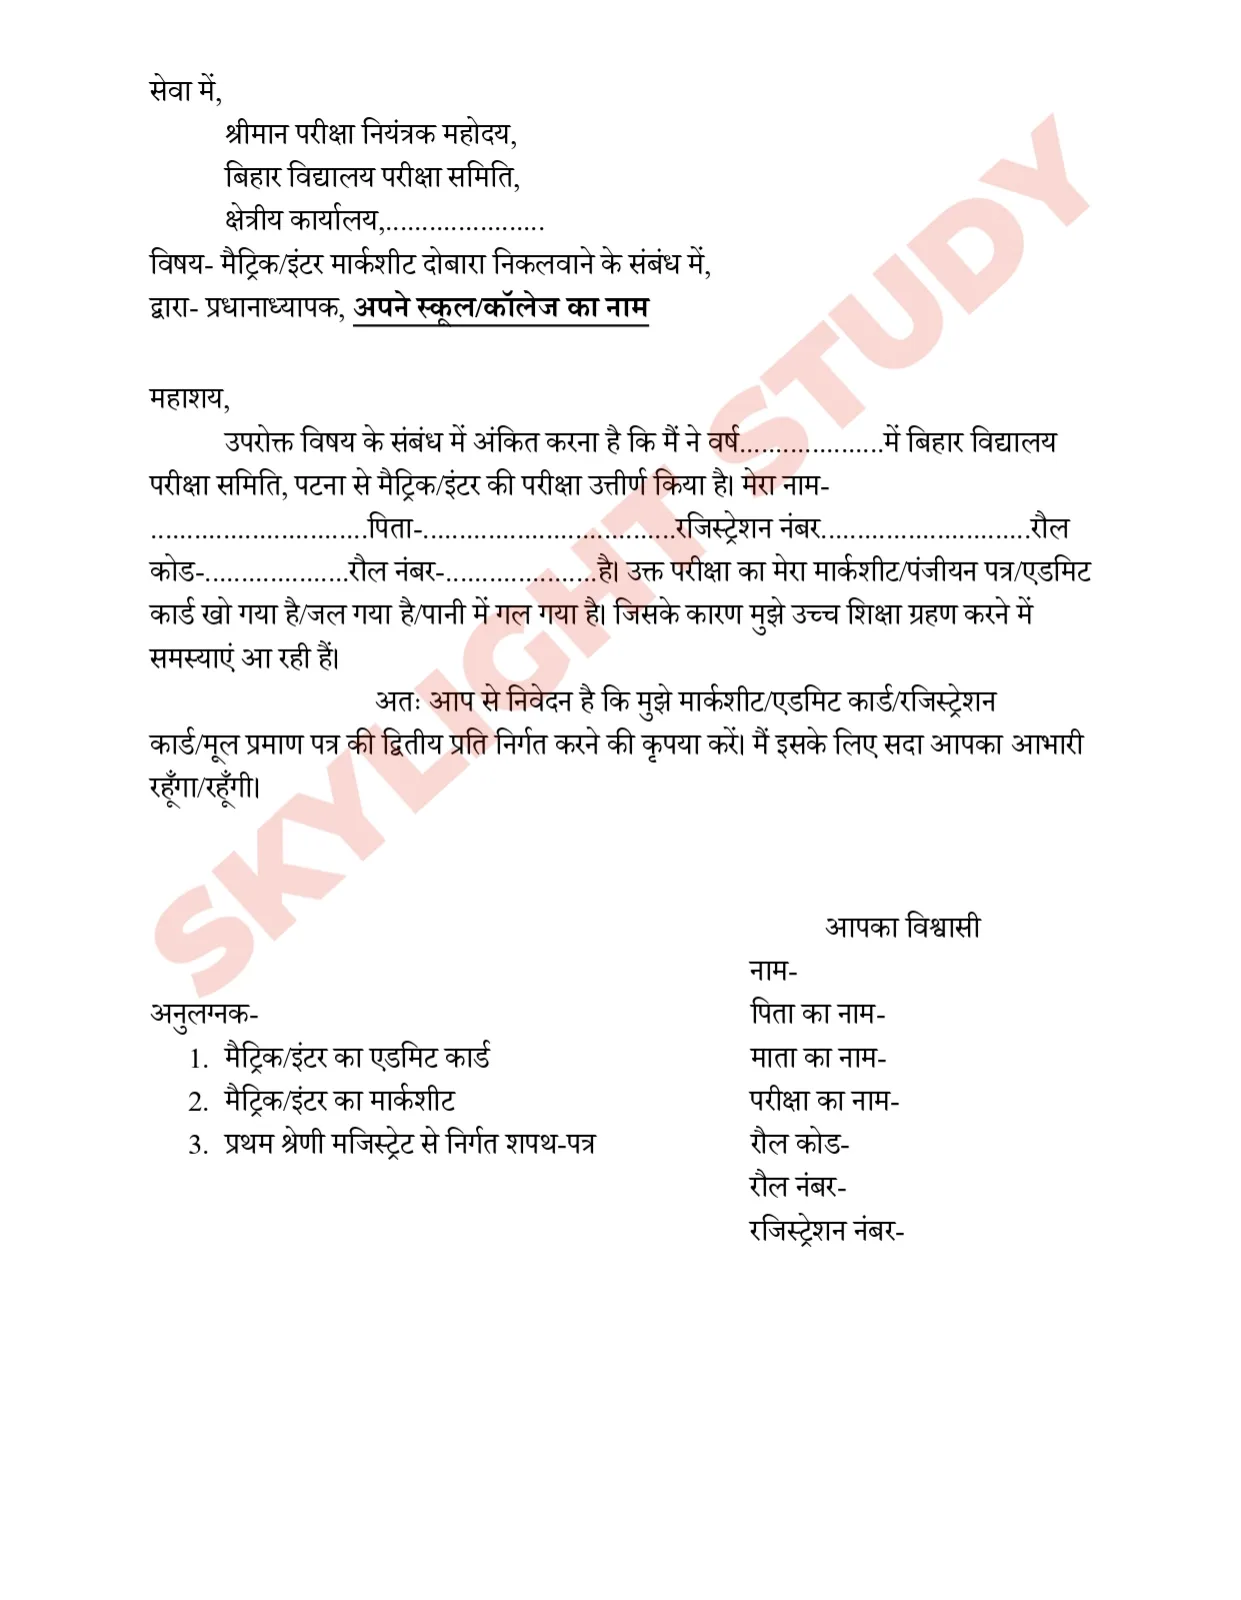 Bihar board marksheet registration card admit card certificate kho jane par application kaise likhen